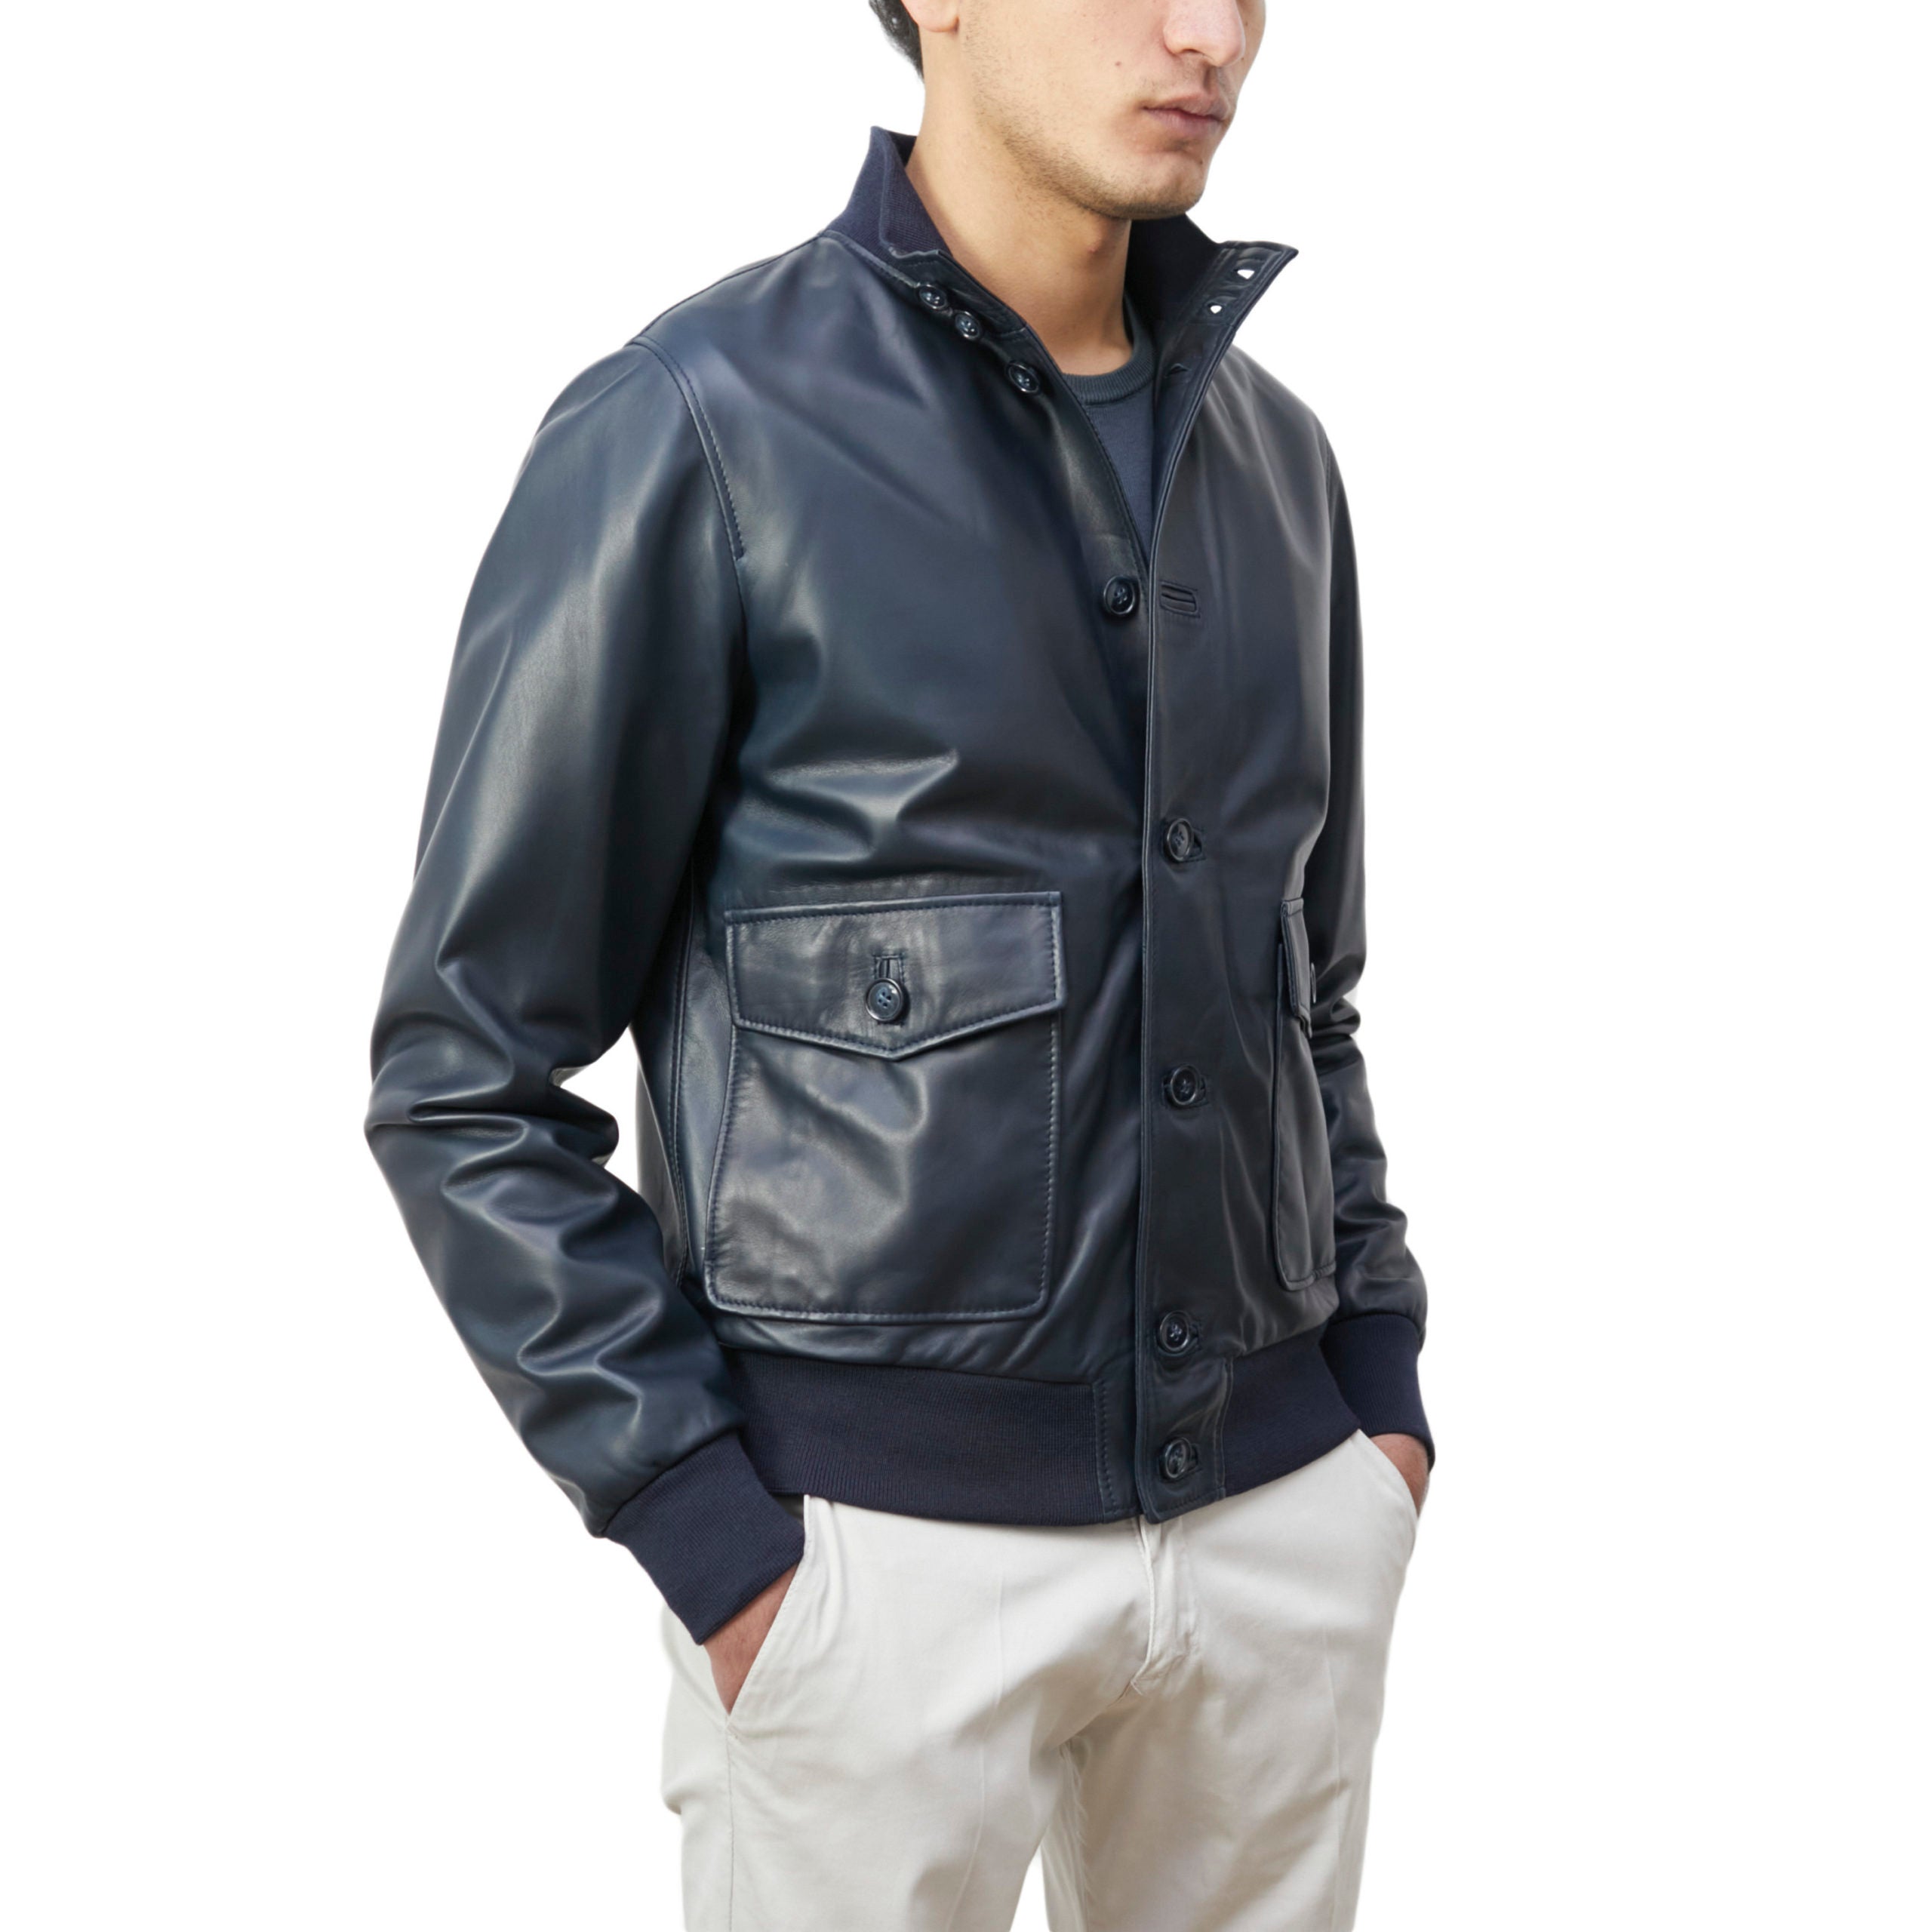 98PTABL leather jacket